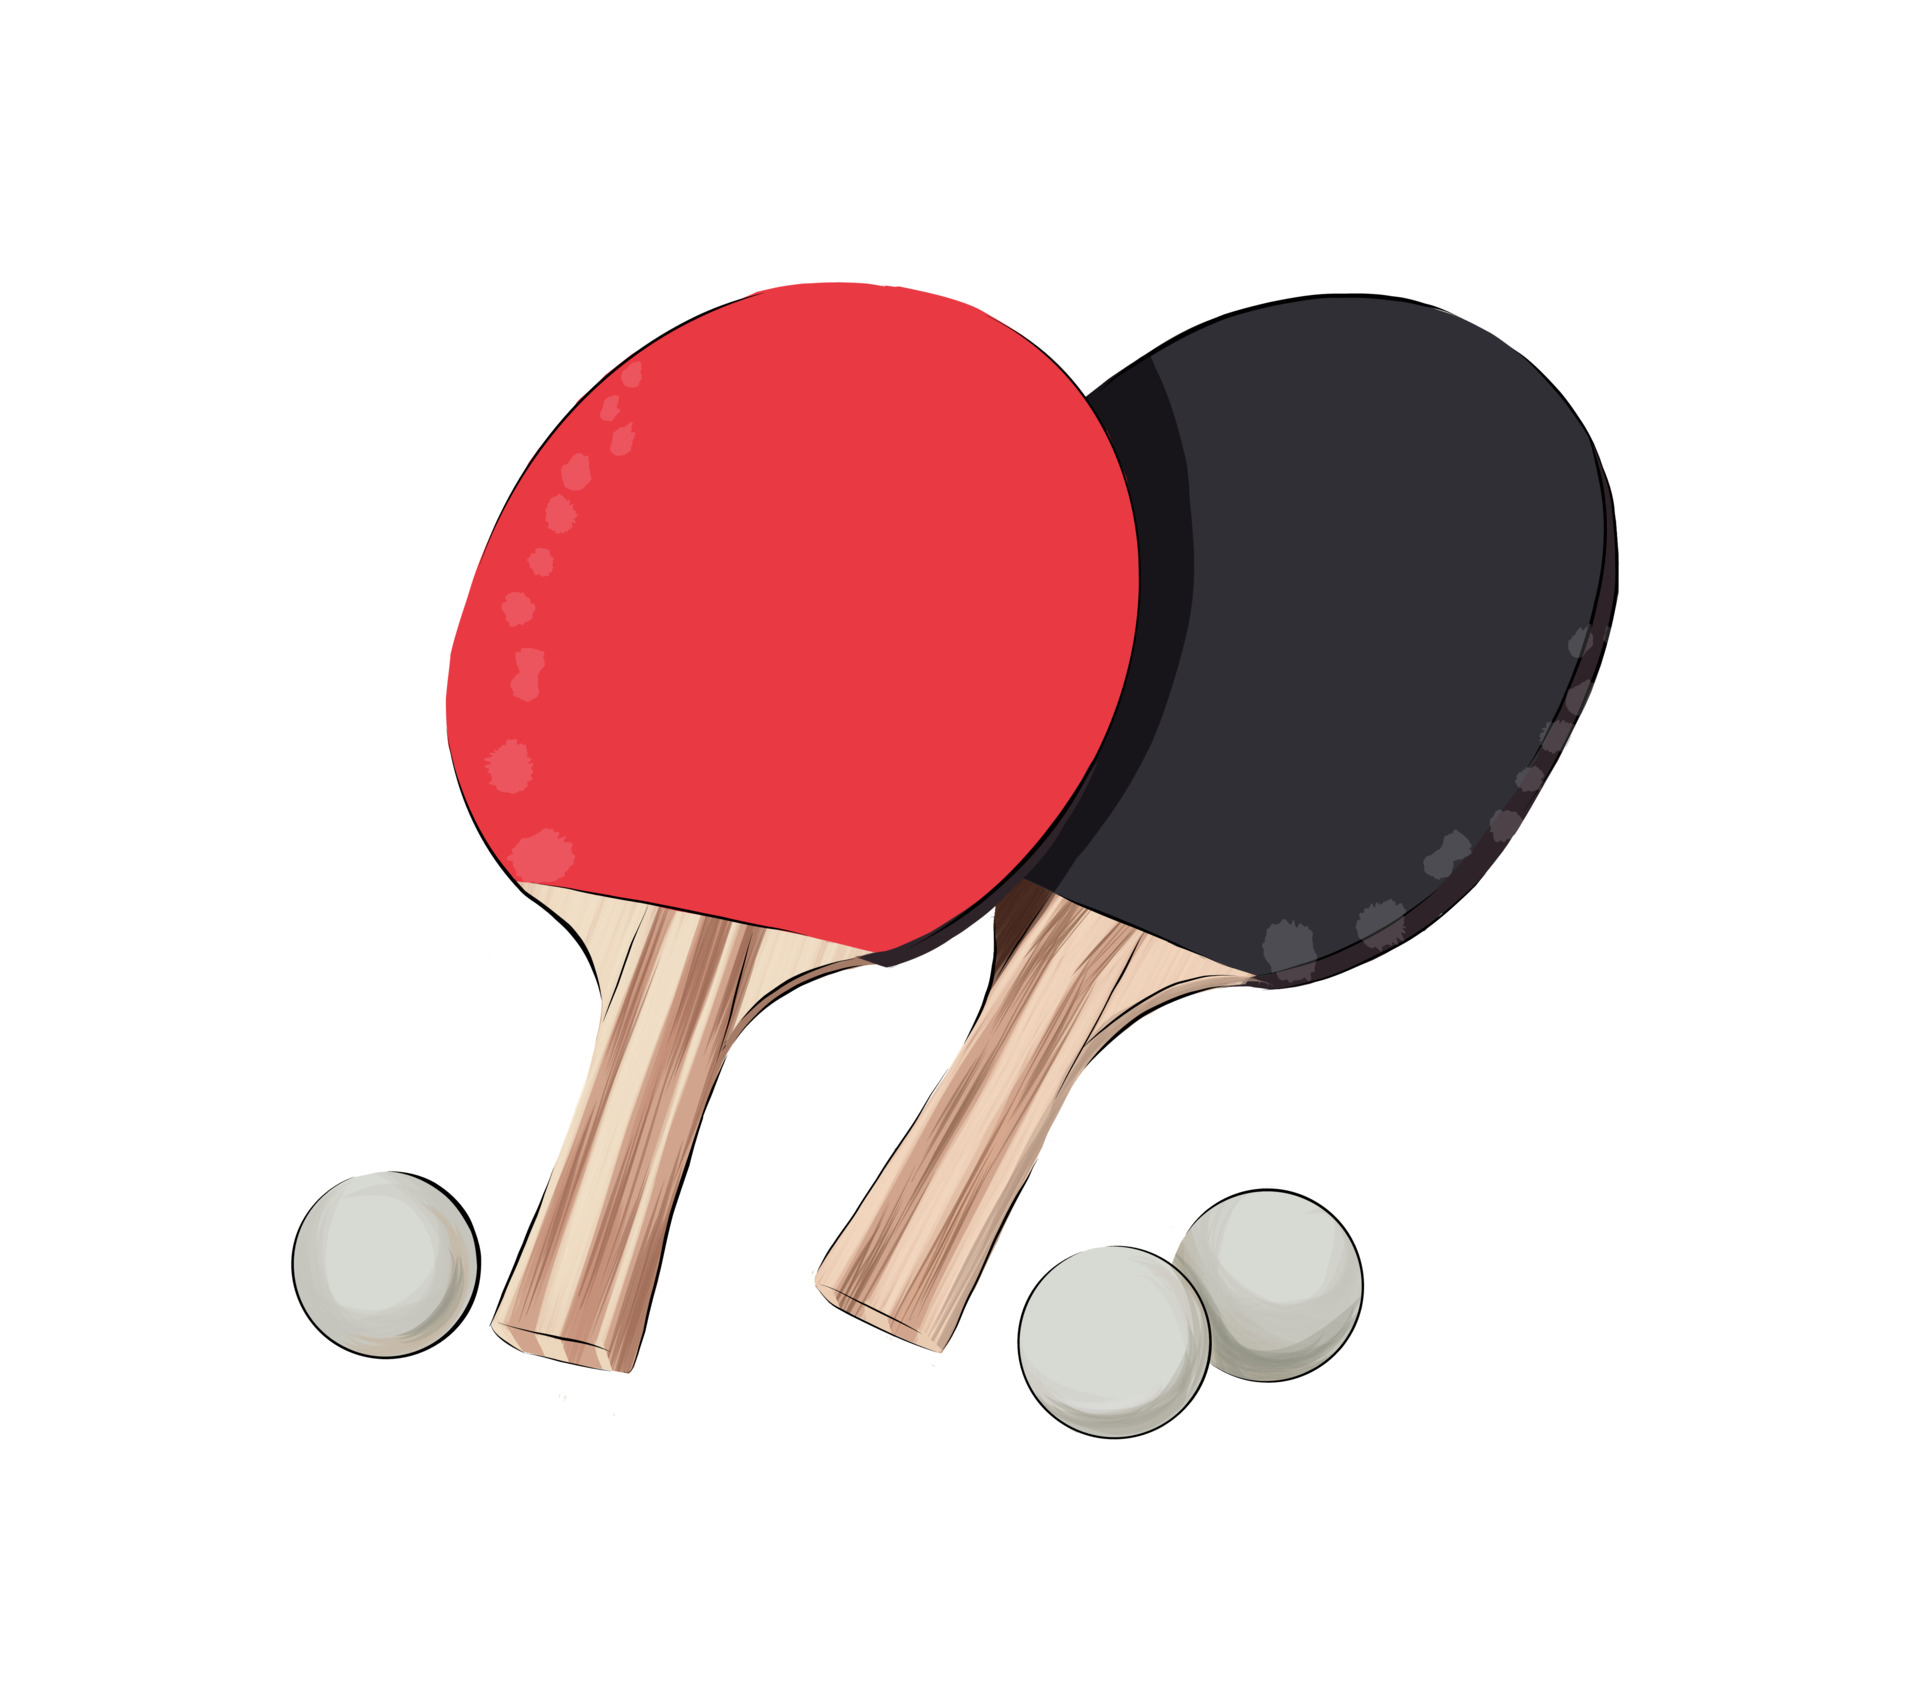 Table tennis hand drawn sketch icon. | Stock vector | Colourbox